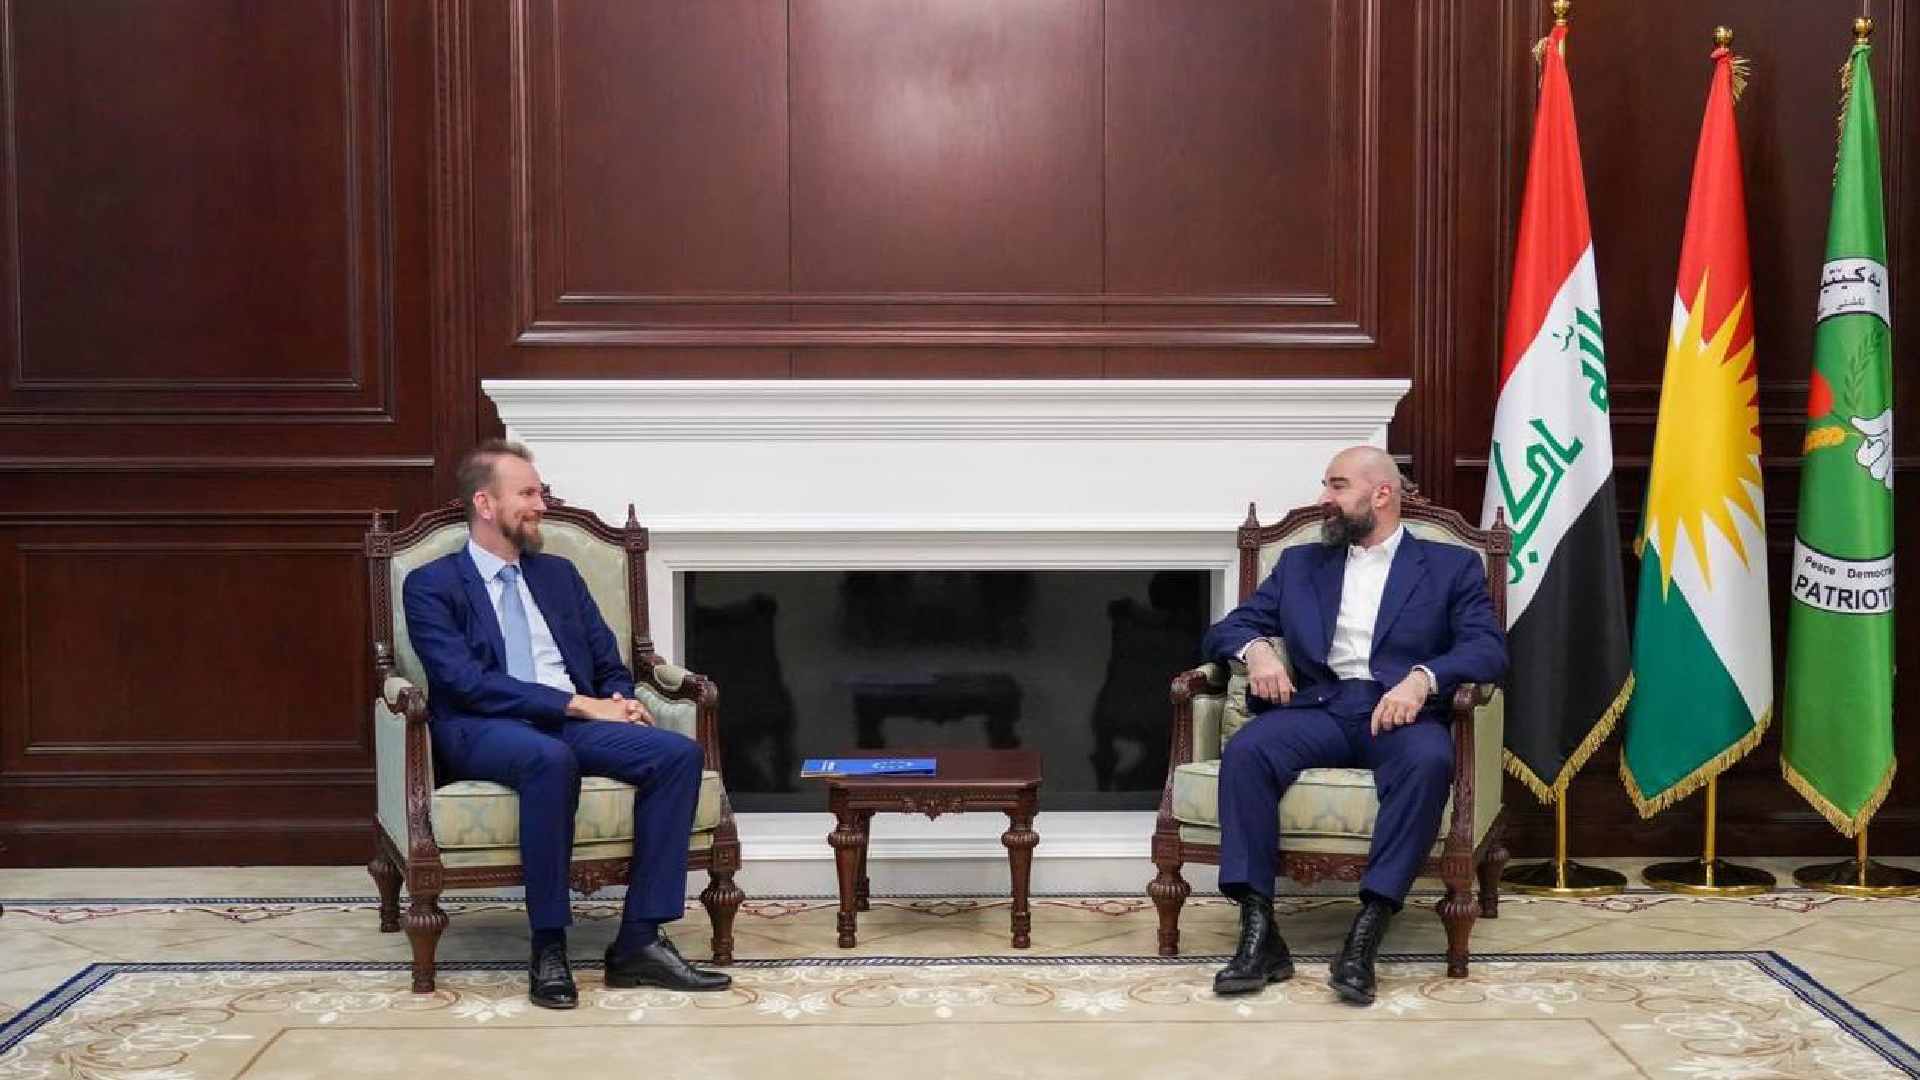 PUK President and EU’s Ambassador to Iraq